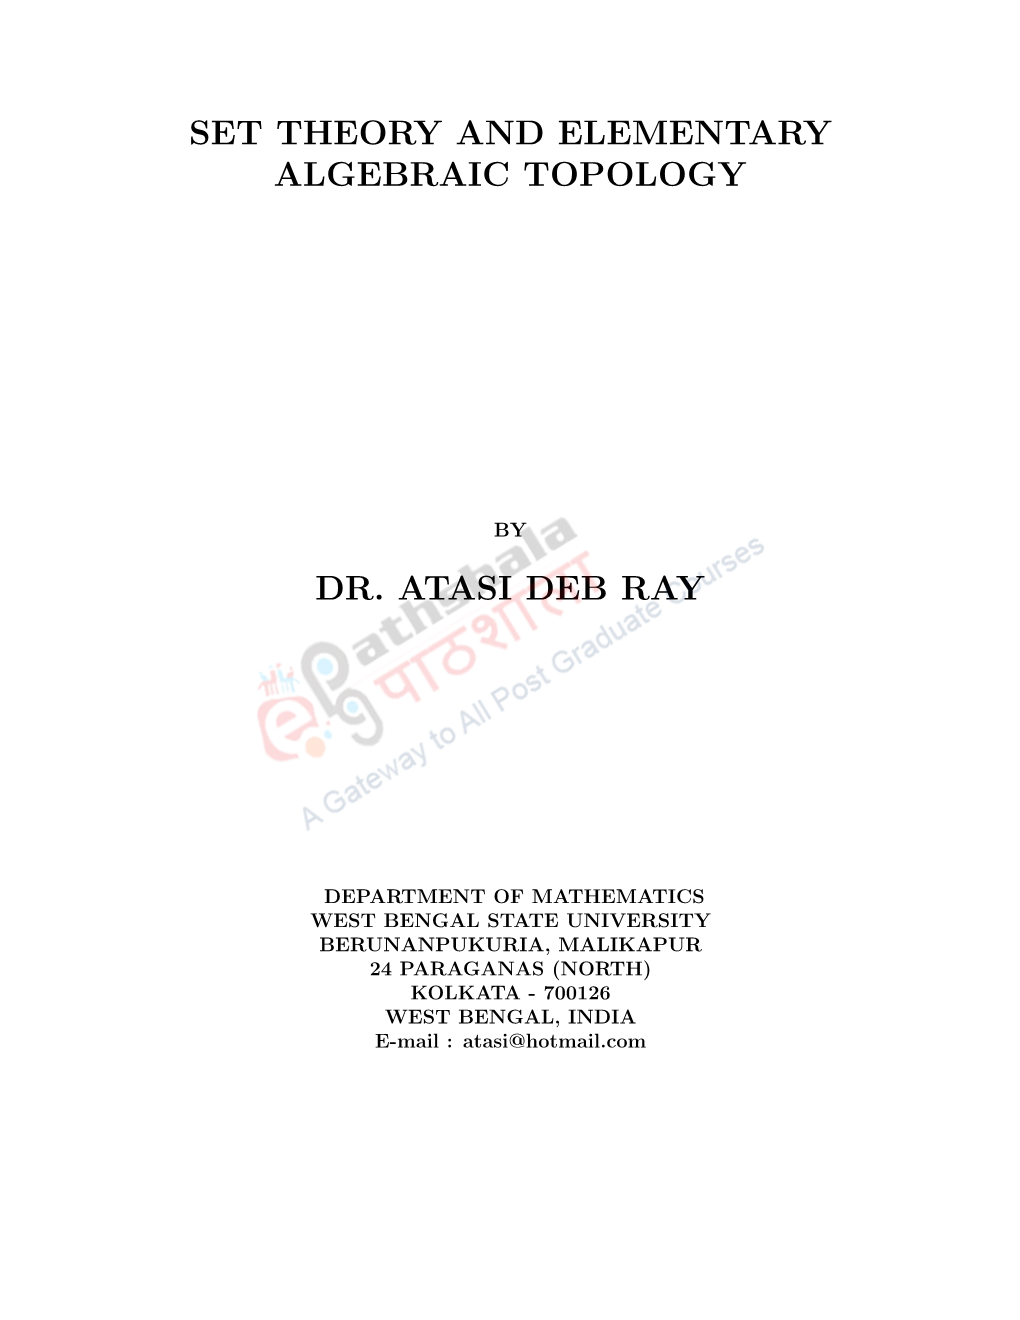 Set Theory and Elementary Algebraic Topology